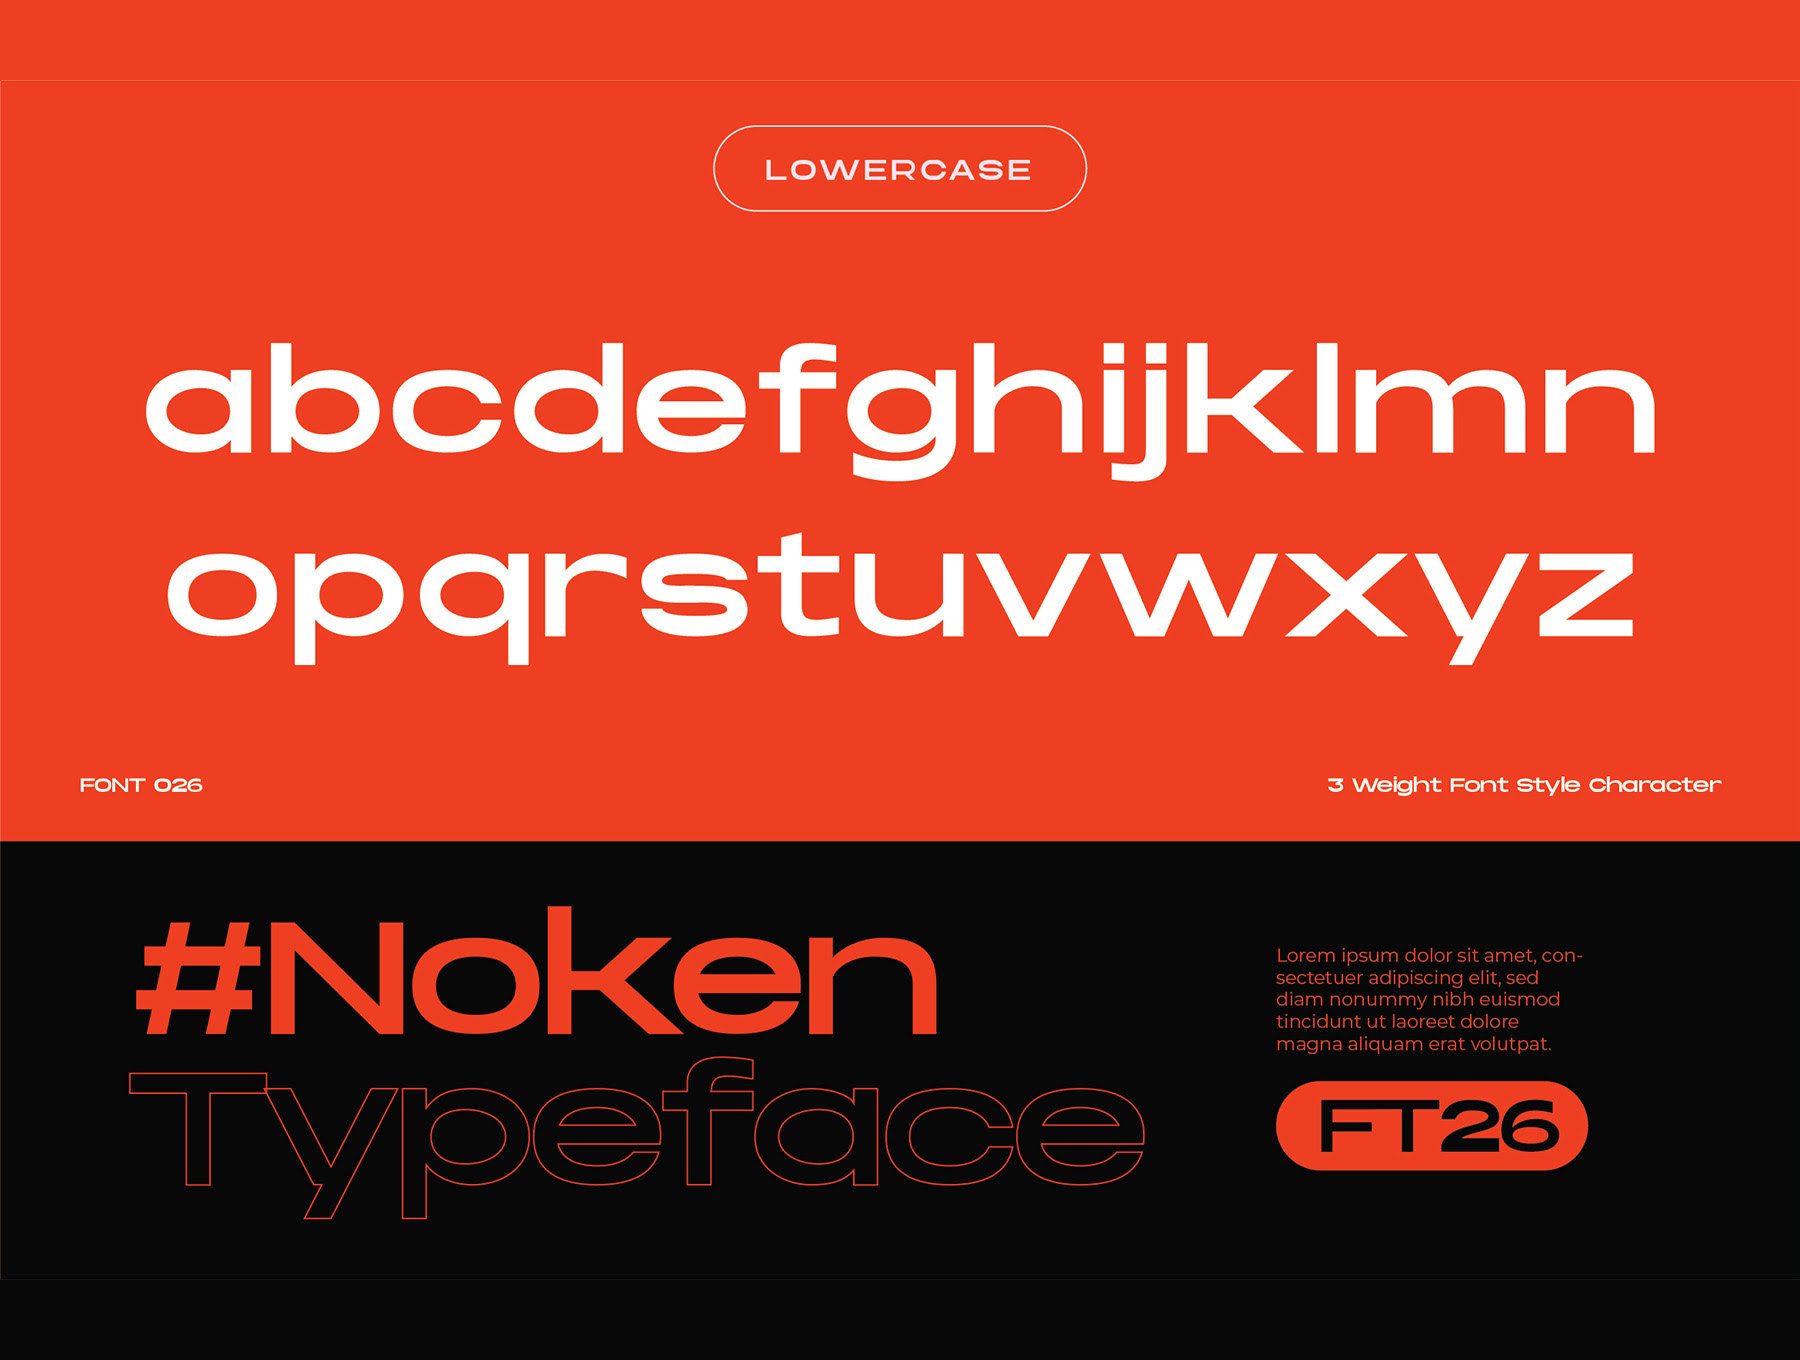 Noken Extended-多功能字体 Noken Extended - Versatile Typeface AE, ttf, otf格式-字体-到位啦UI